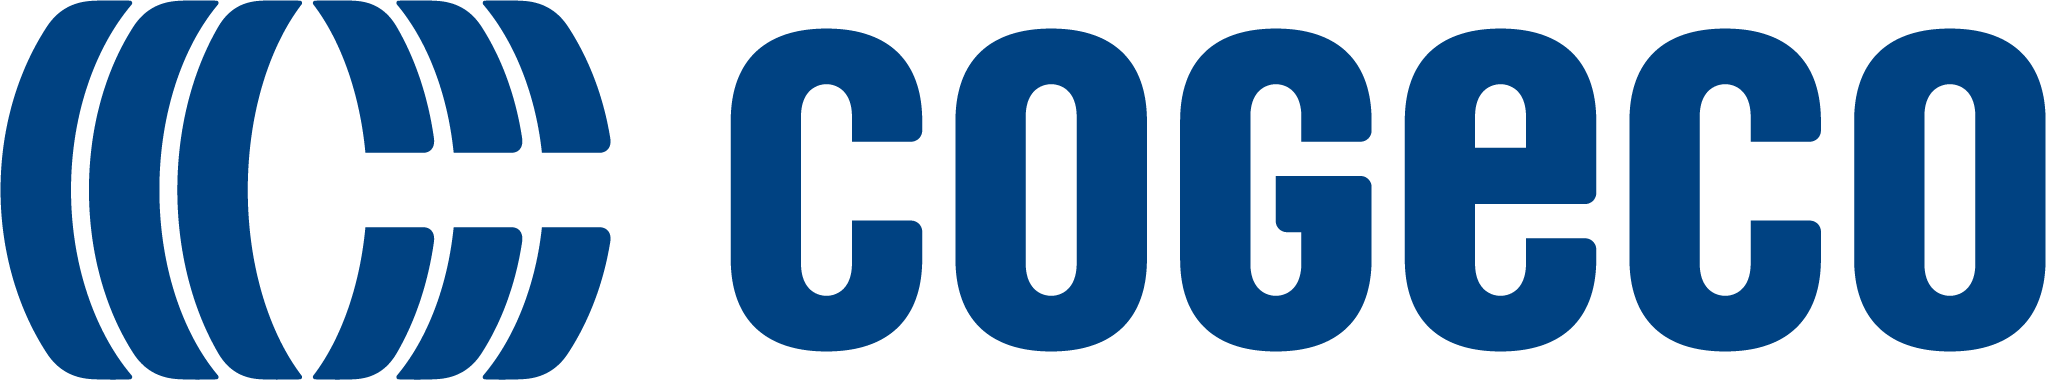 Cogego